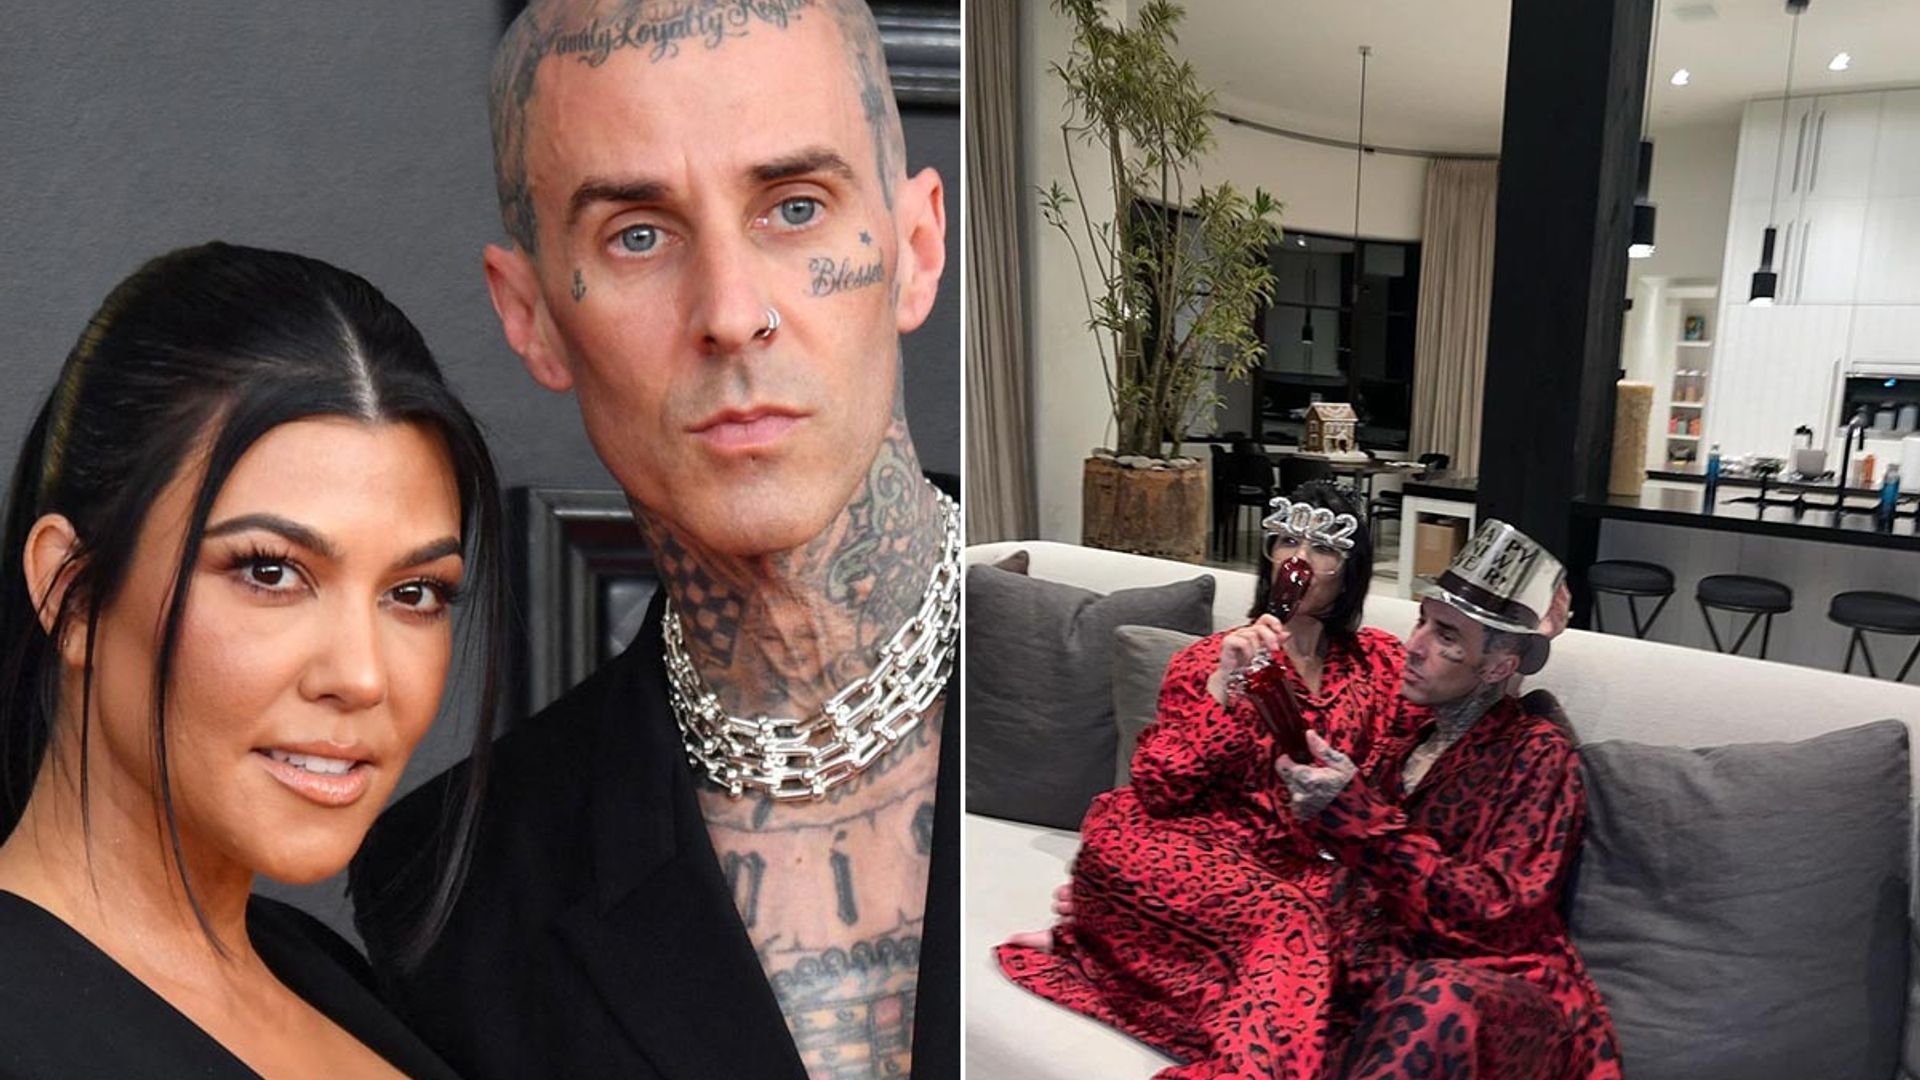 Travis Barker's zen mansion with wife Kourtney Kardashian leaves fans divided